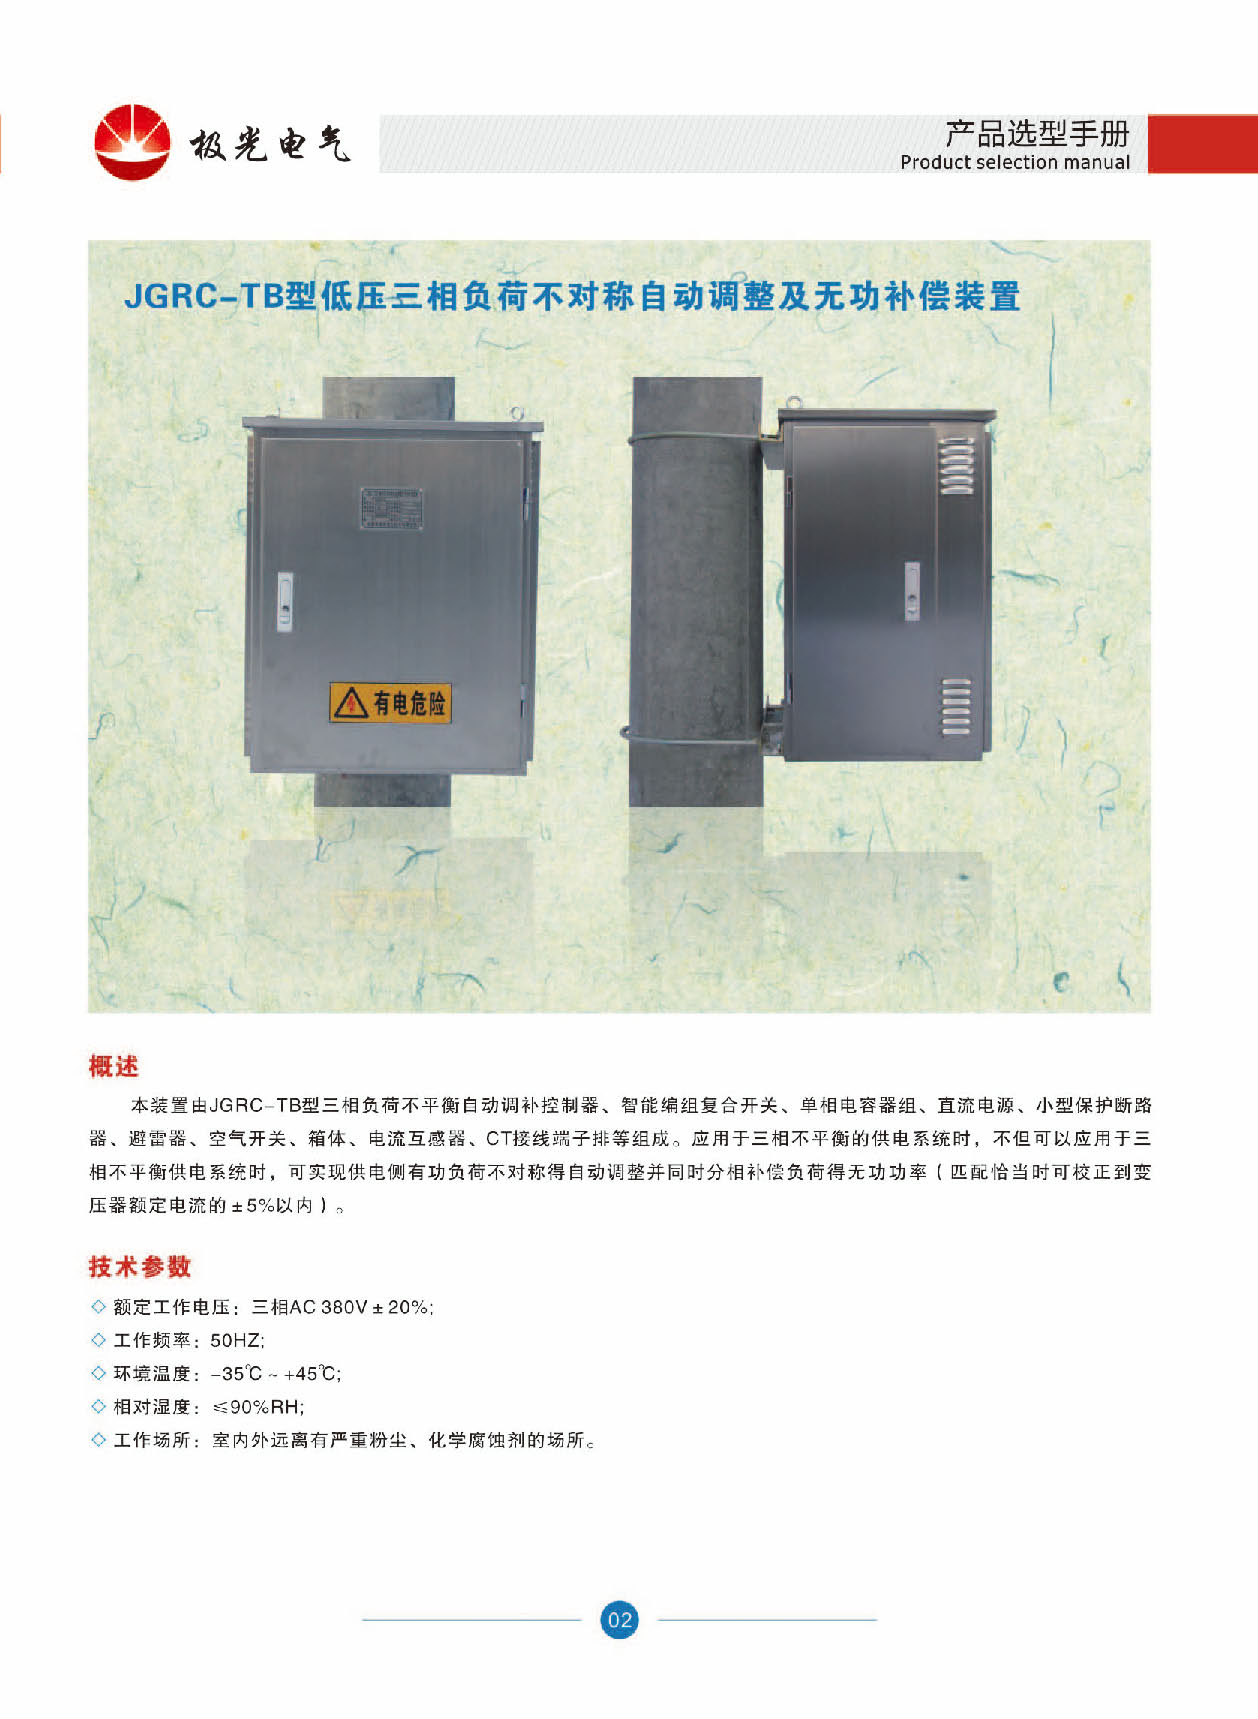 JGRC-TB型低(dī)壓三相負荷不對稱自動調整及無功補償裝置